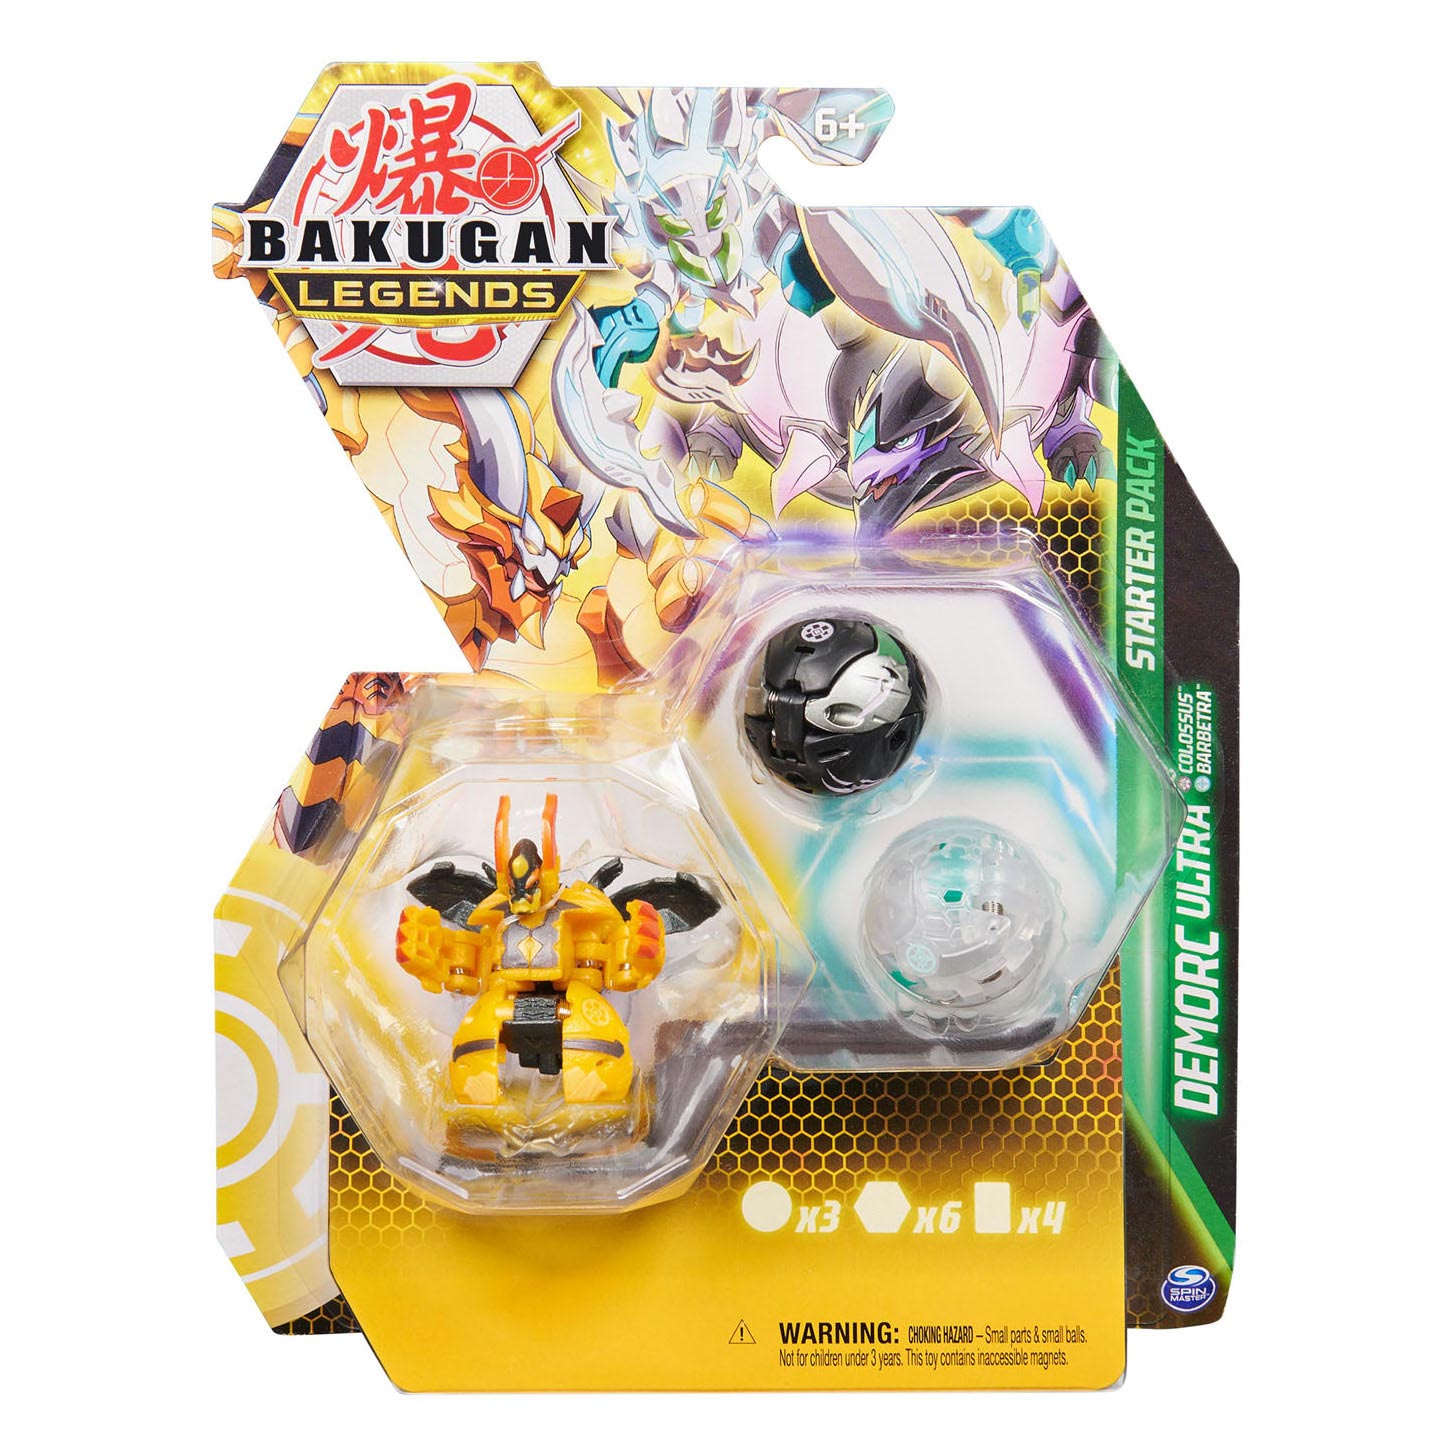 Bakugan Legends (S5) - Starterspakket 3-pack